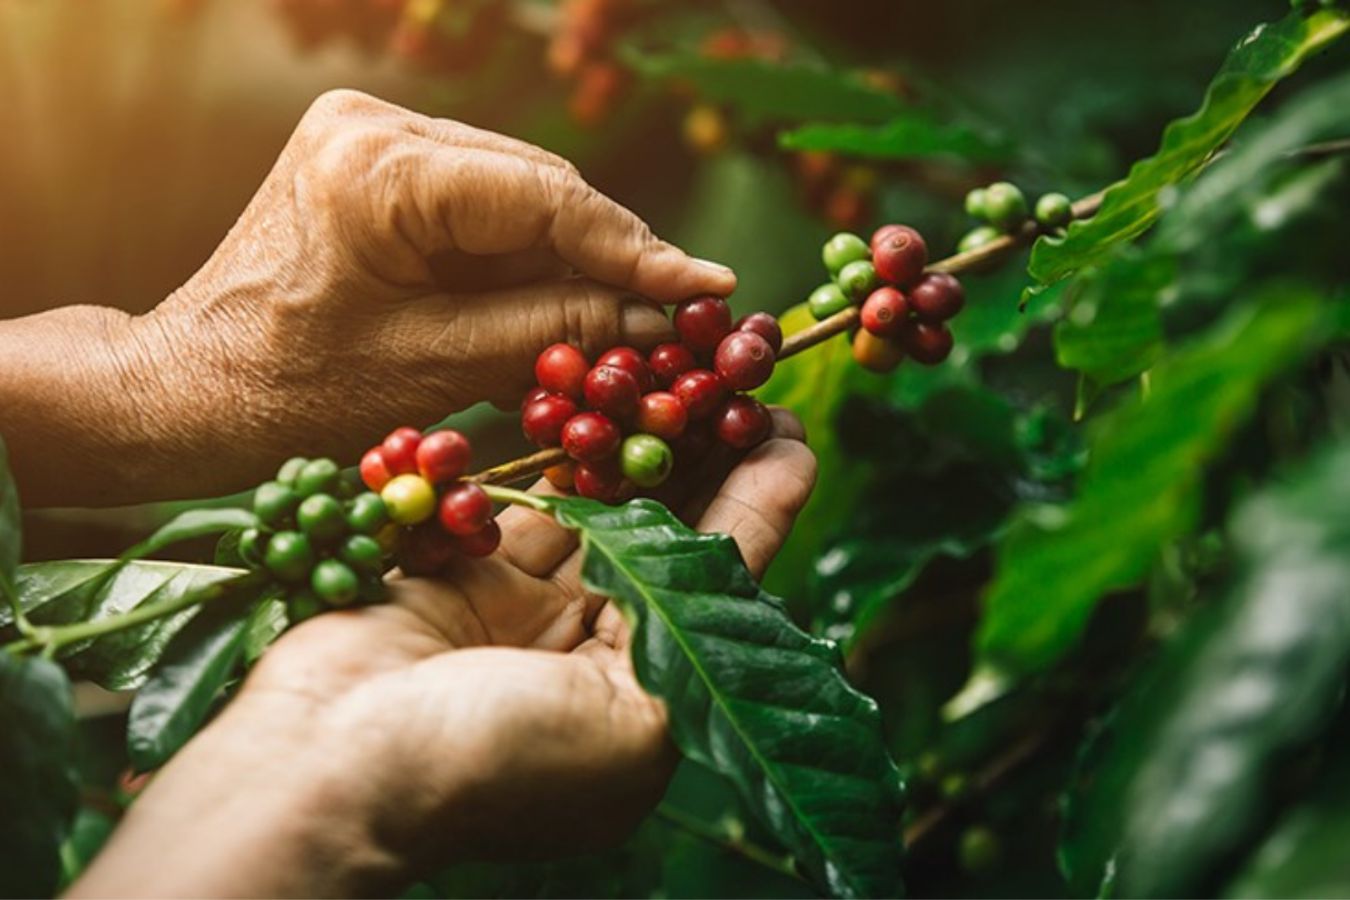 Distinguishing biological characteristics of coffee plants